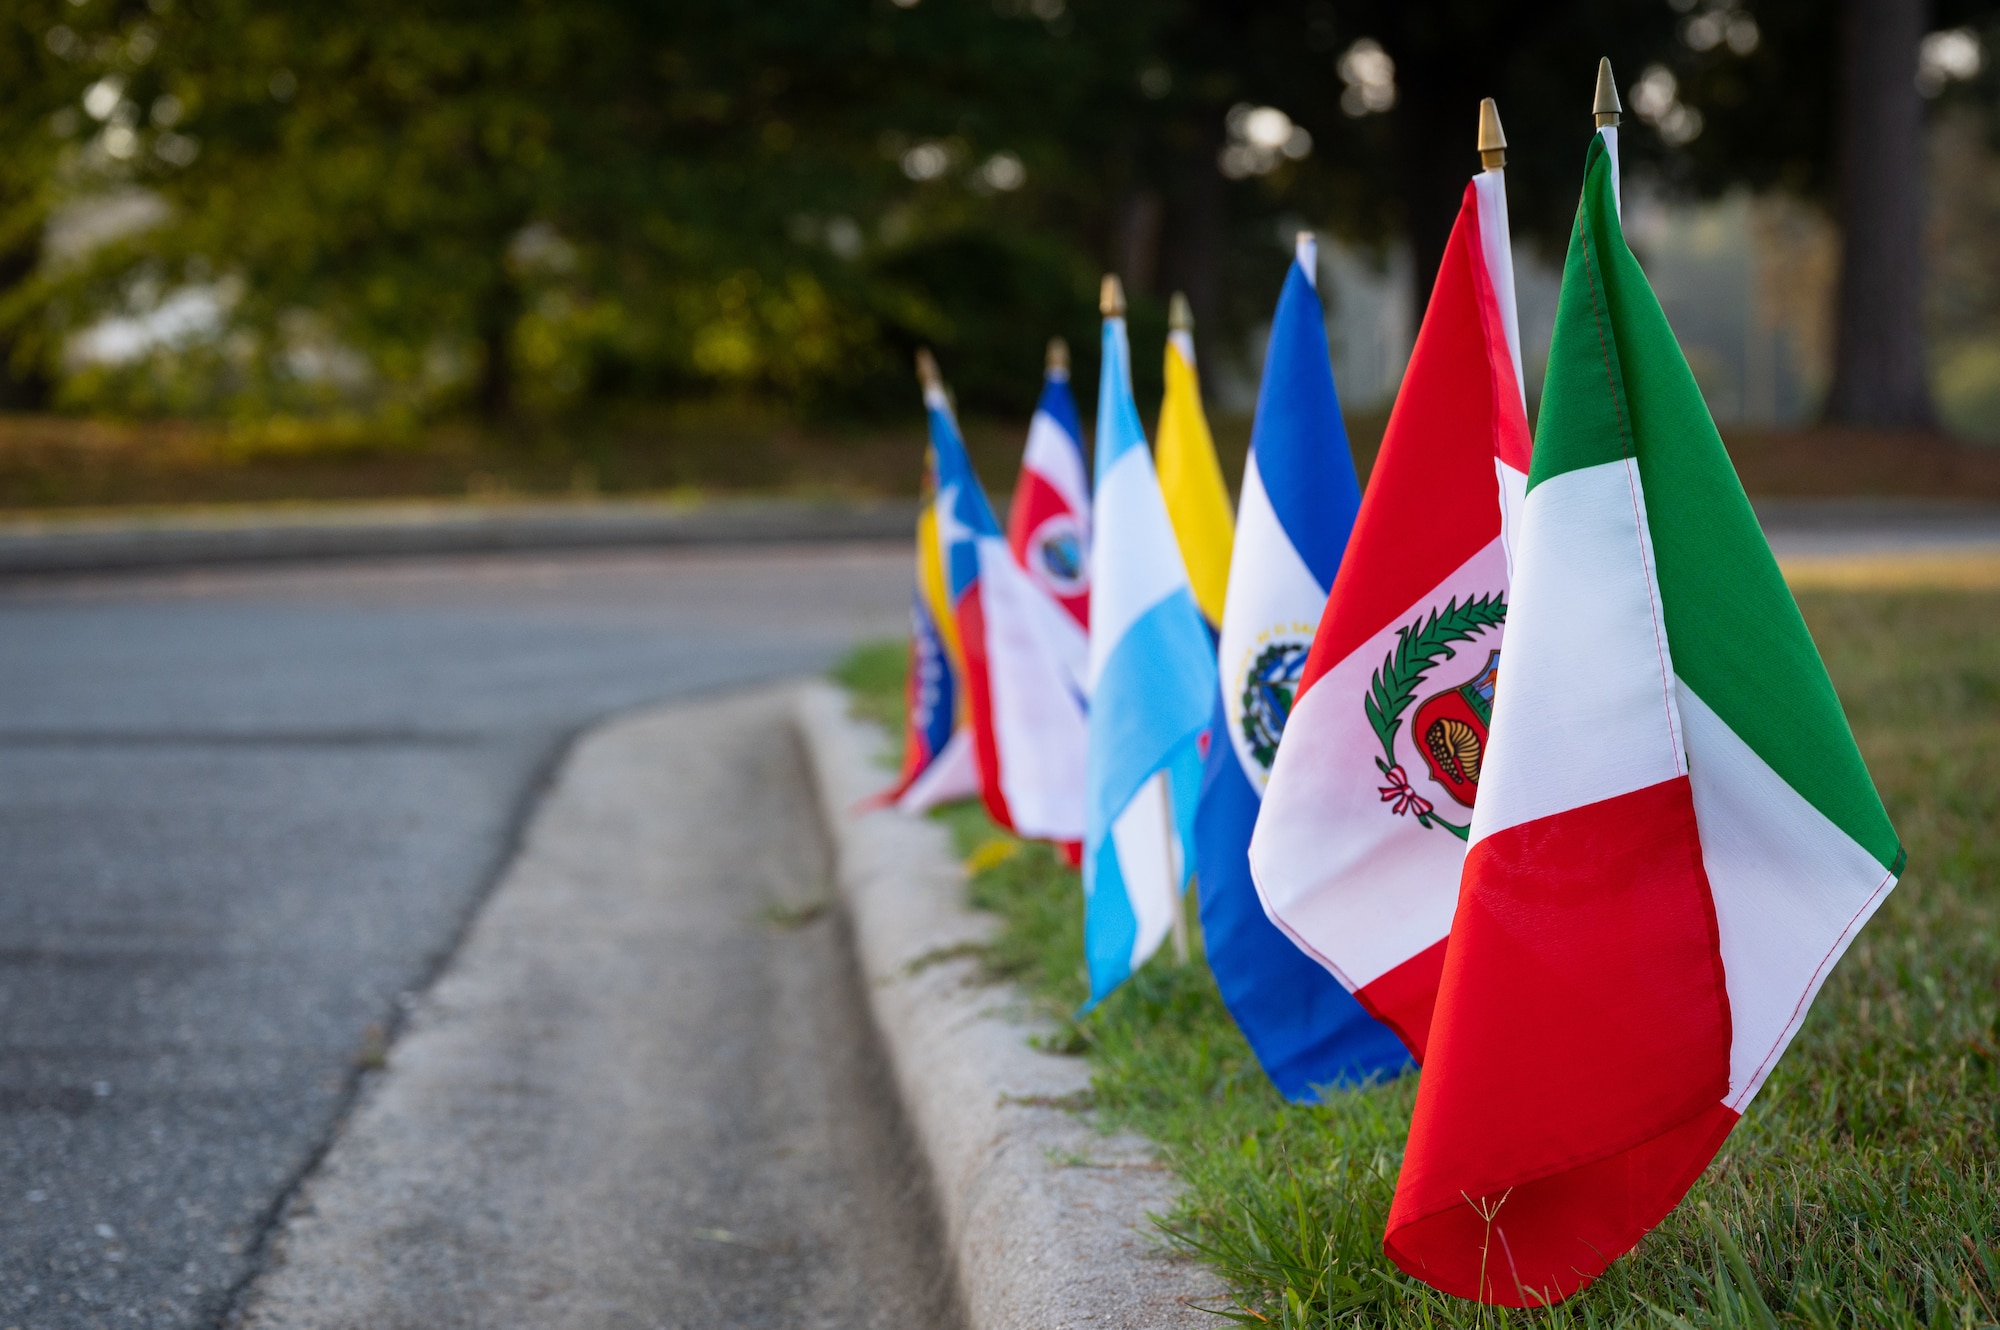 Flags are displayed during a Hispanic heritage fun run at Seymour Johnson Air Force Base, North Carolina, Sept. 16, 2021. The flags represented various Hispanic and Latino countries. (U.S. Air Force photo by Senior Airman David Lynn)